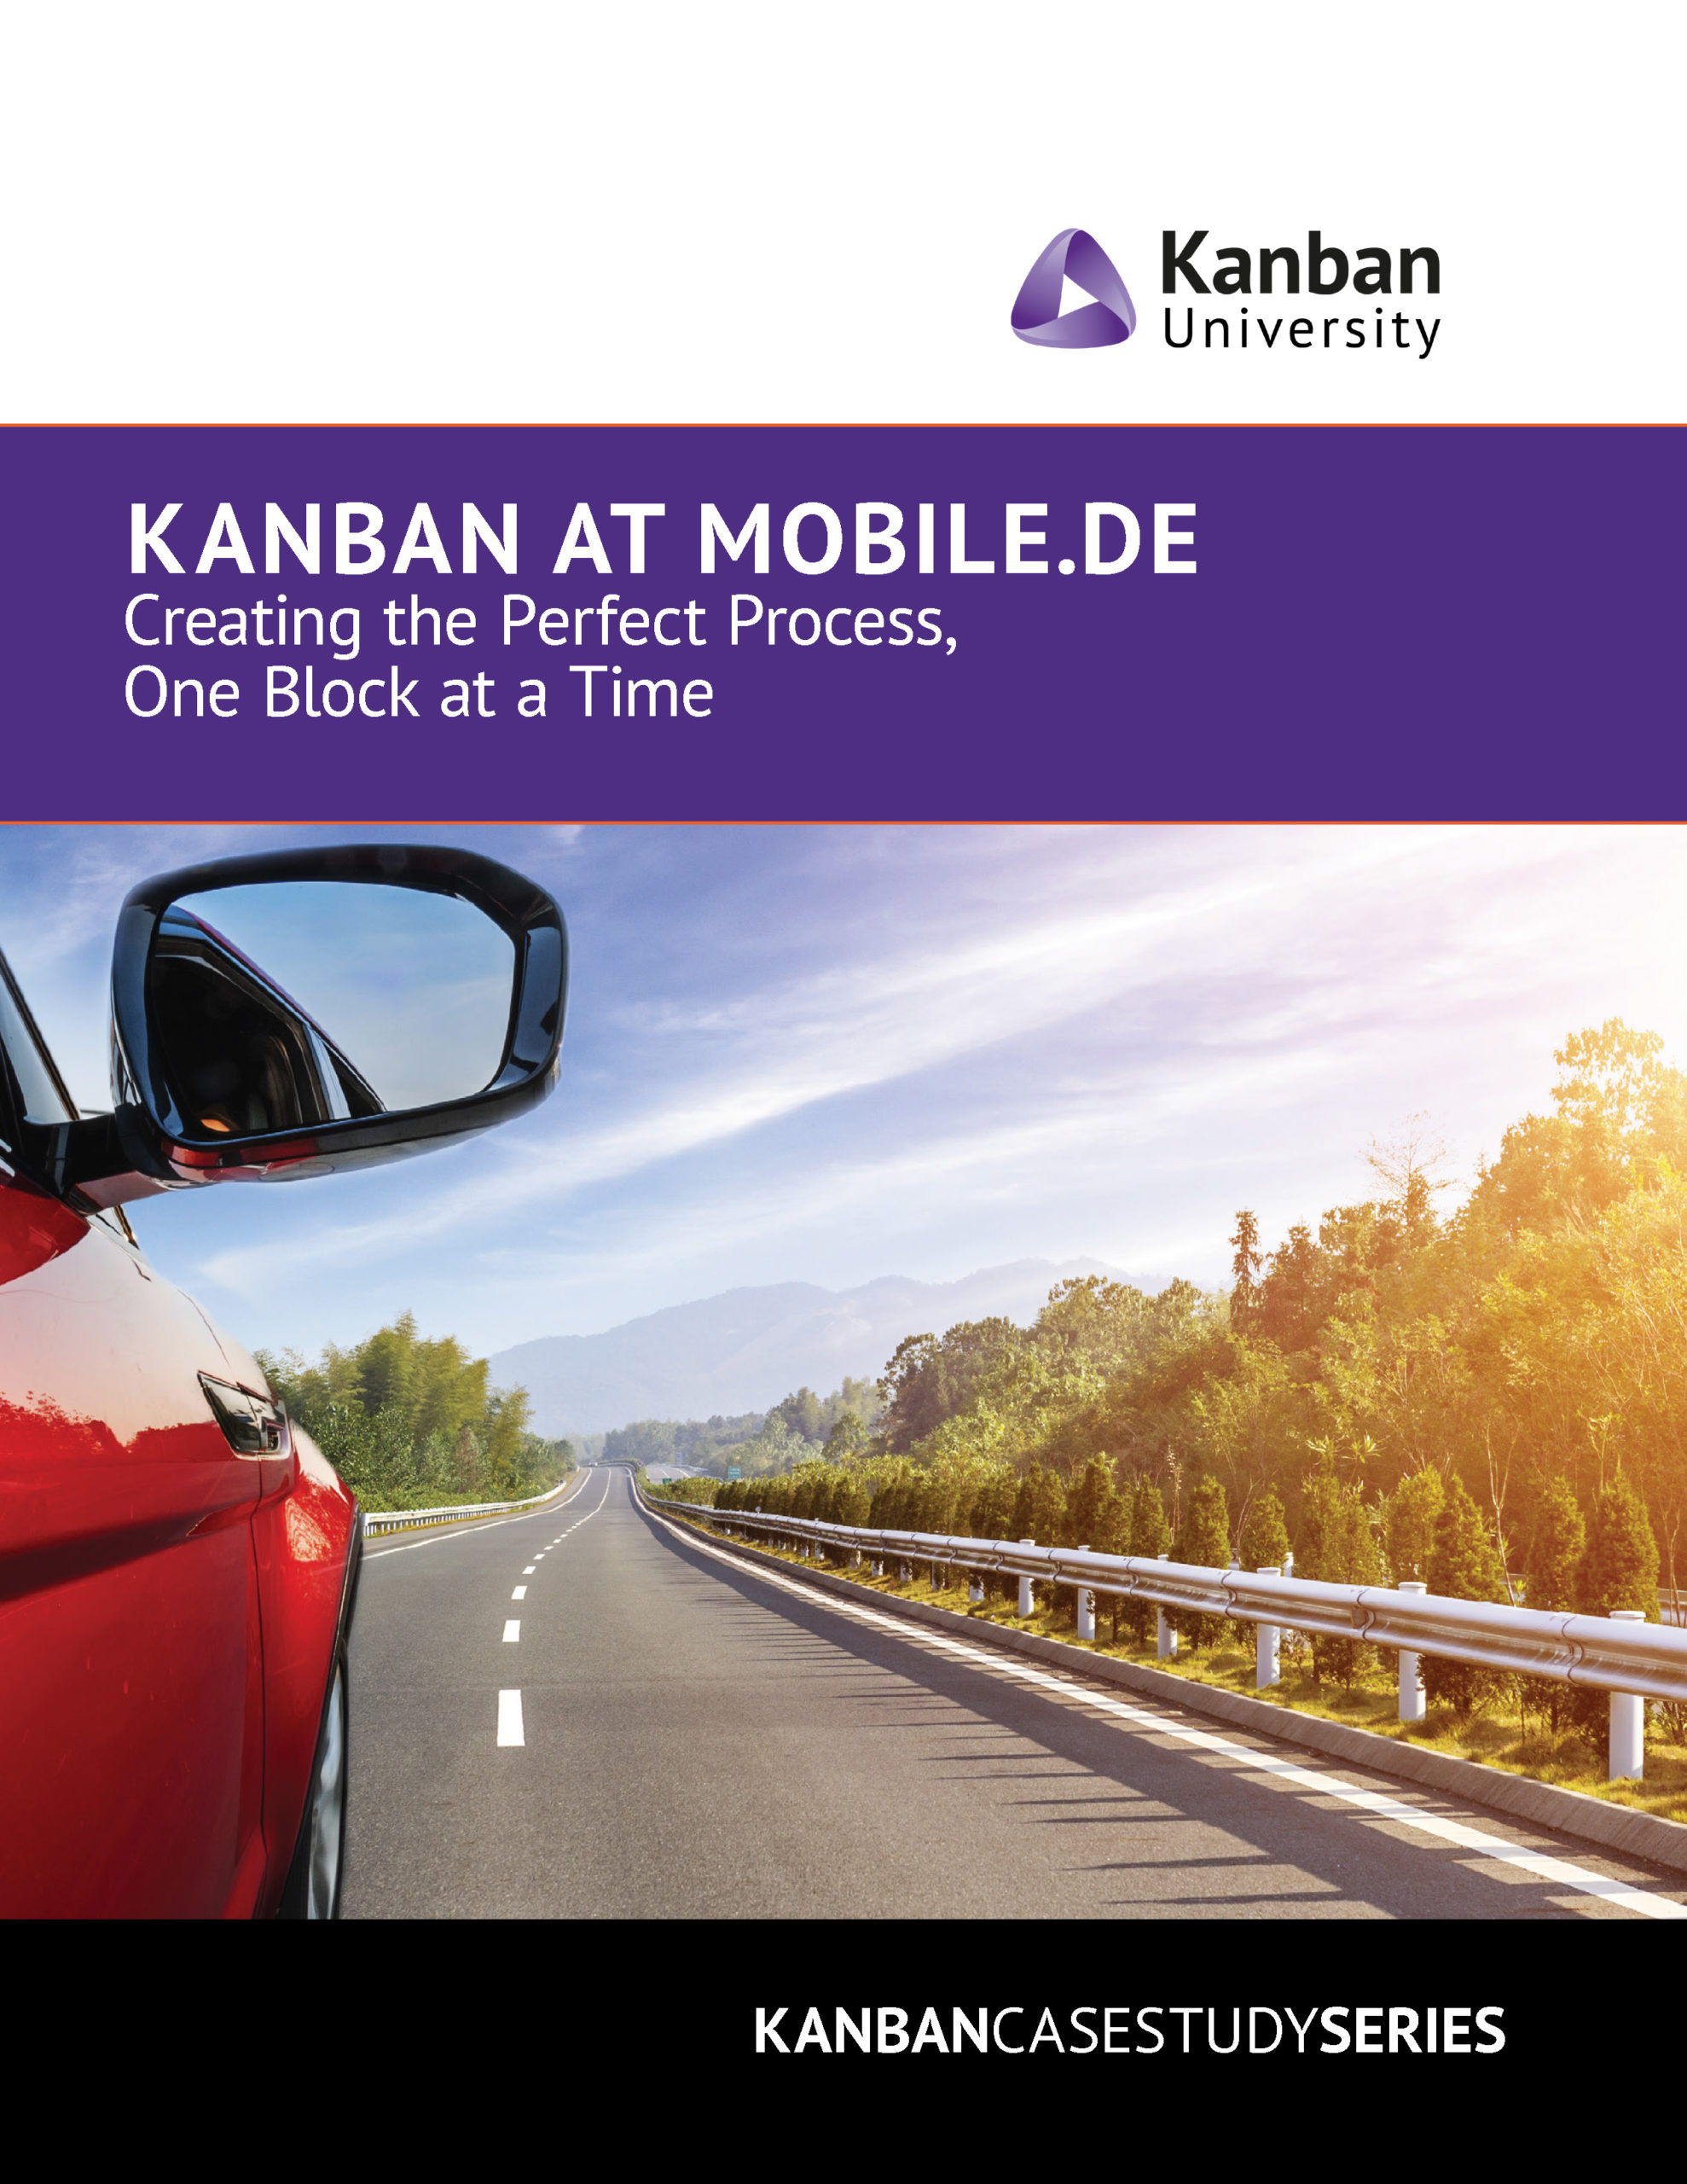 kanban for planet group case study pdf